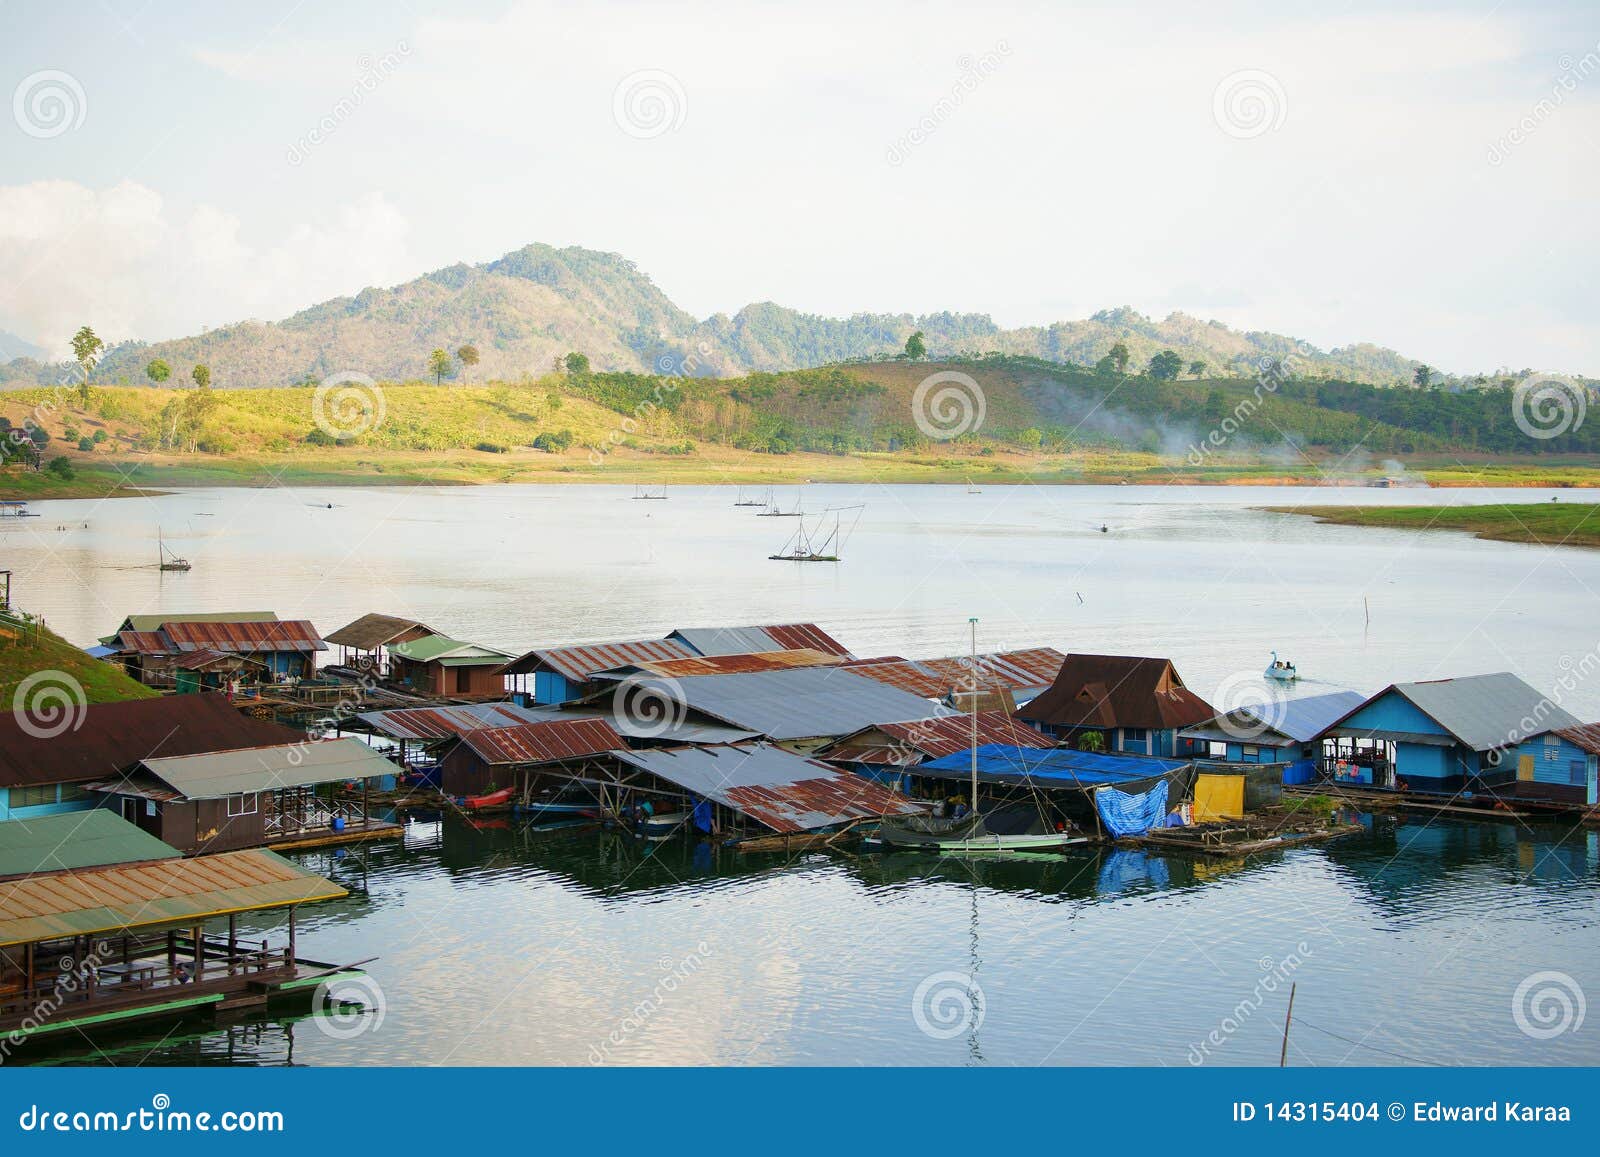 floating houses, wangka, mon minority village